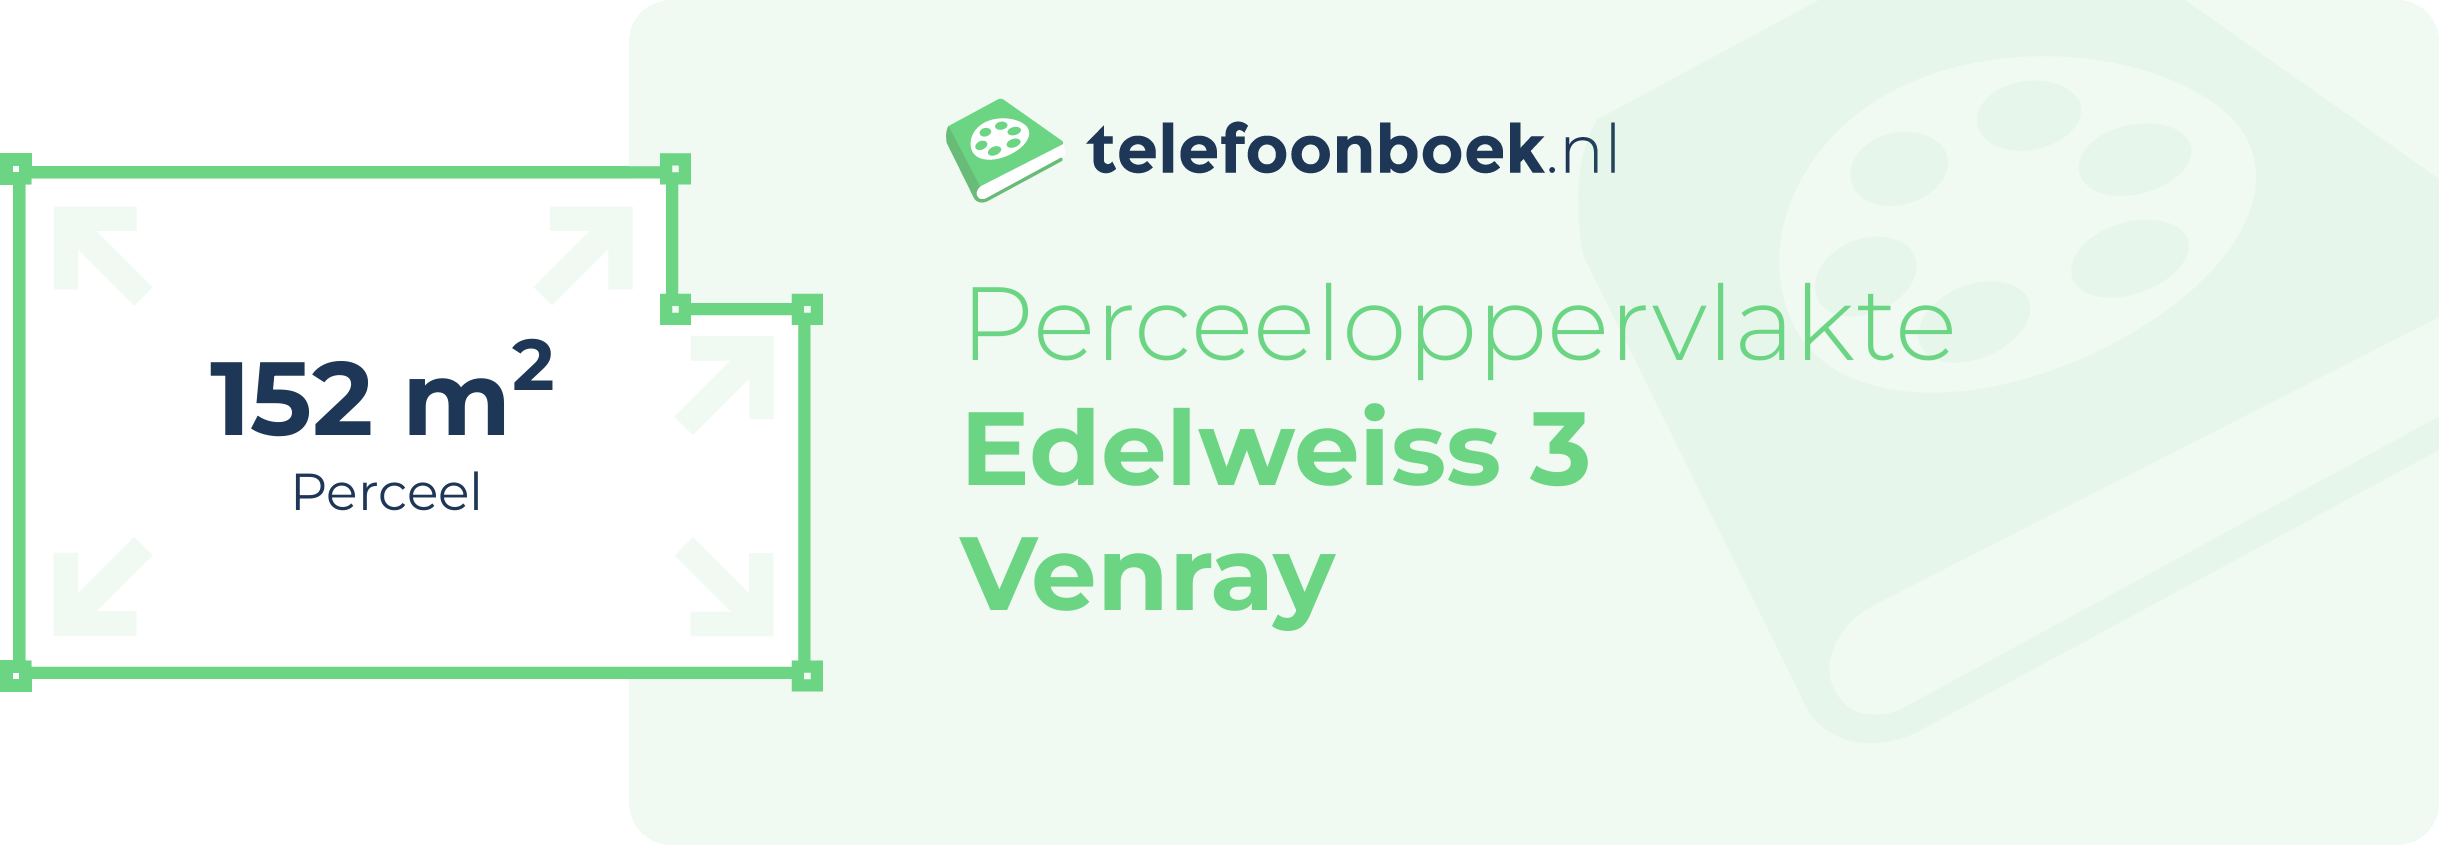 Perceeloppervlakte Edelweiss 3 Venray